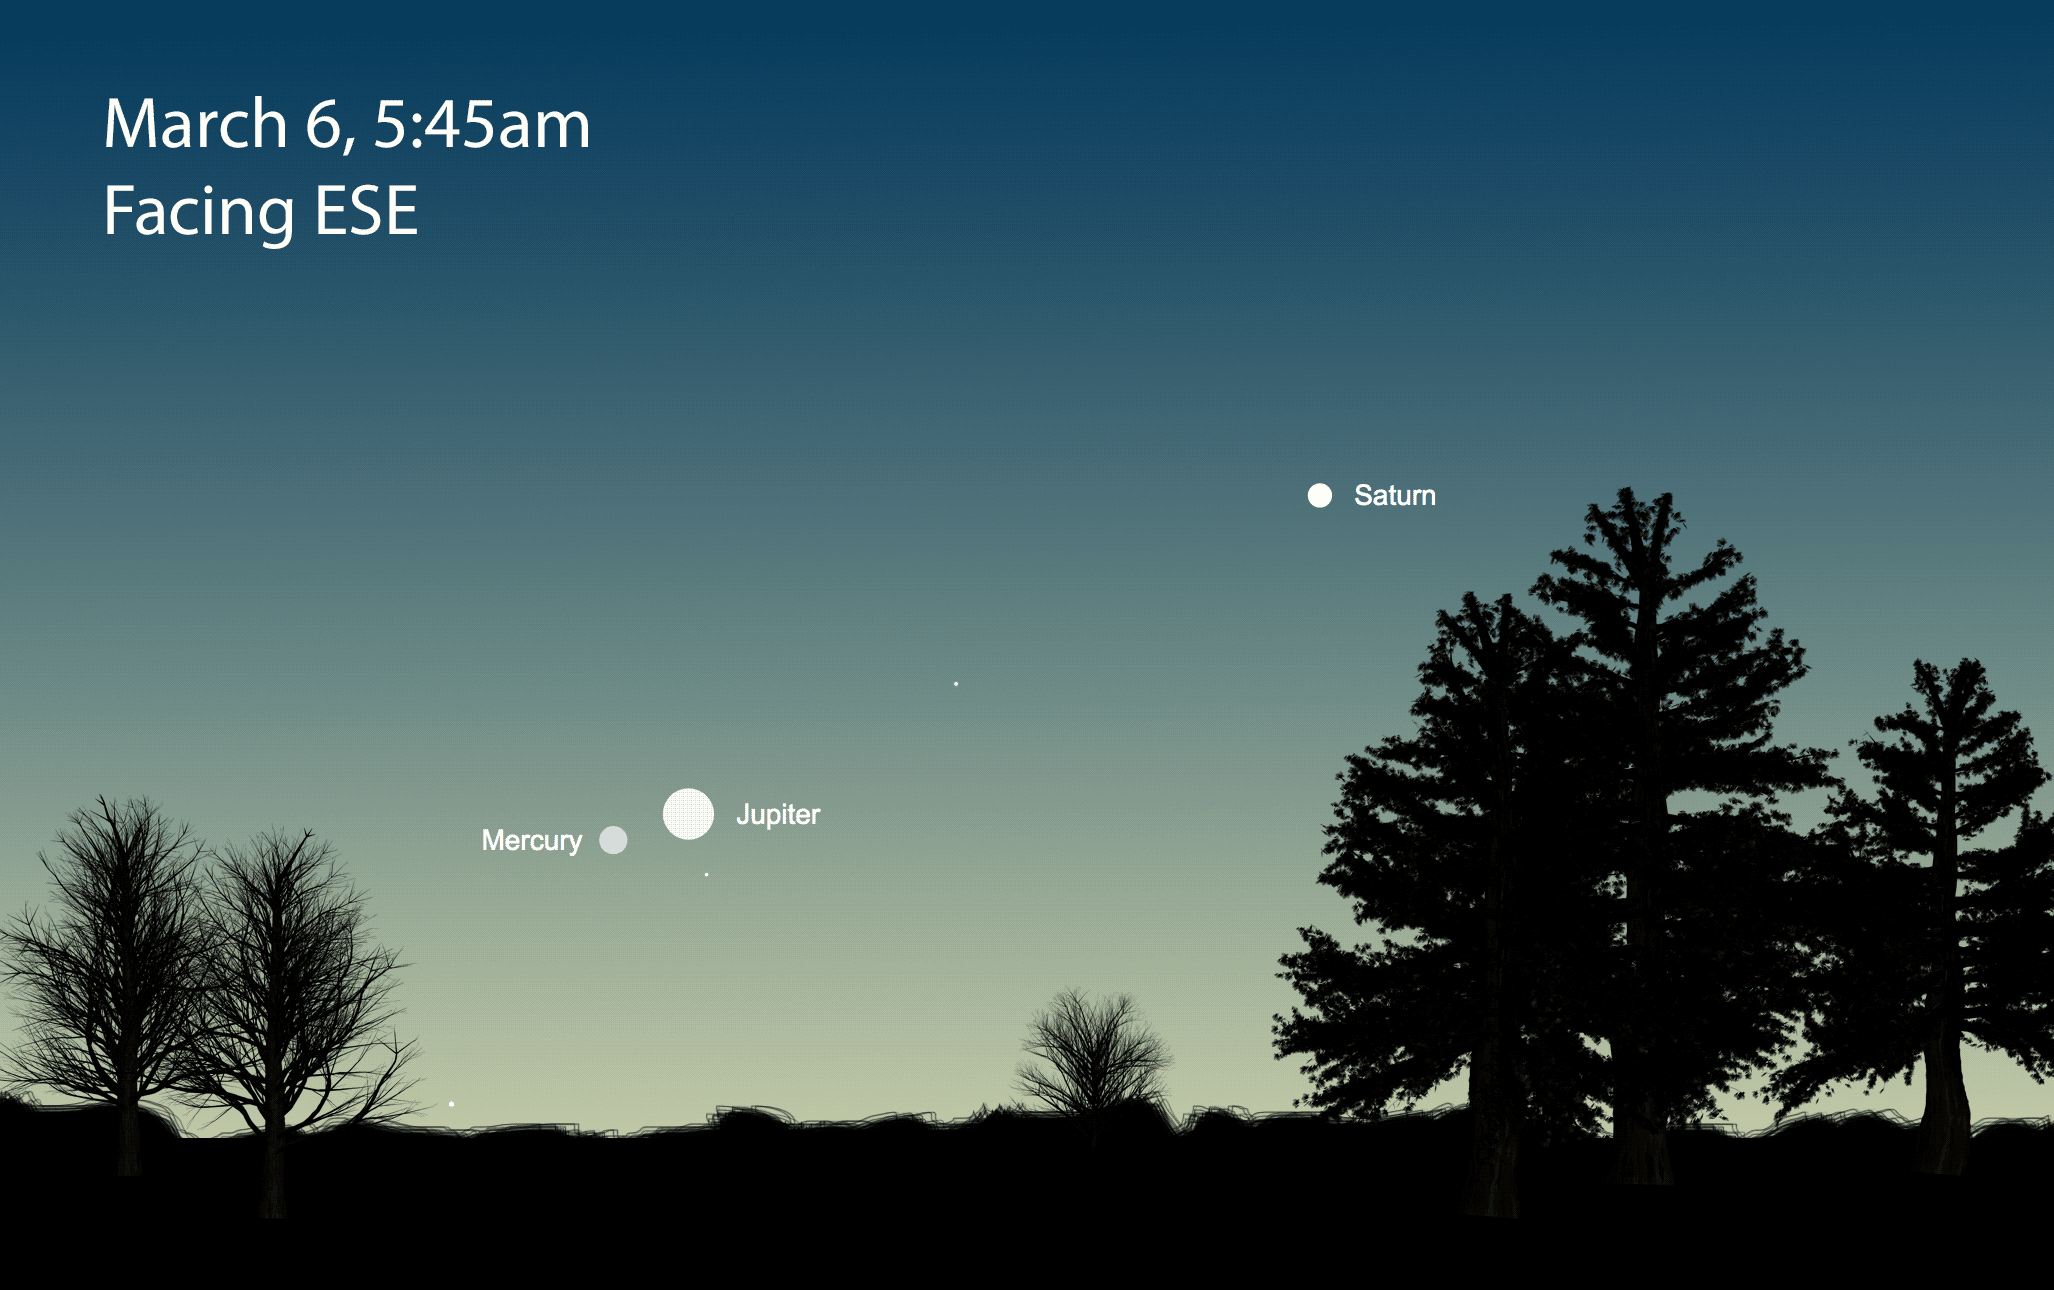 March 6, 2021 morning sky showing Mercury, Jupiter & Saturn